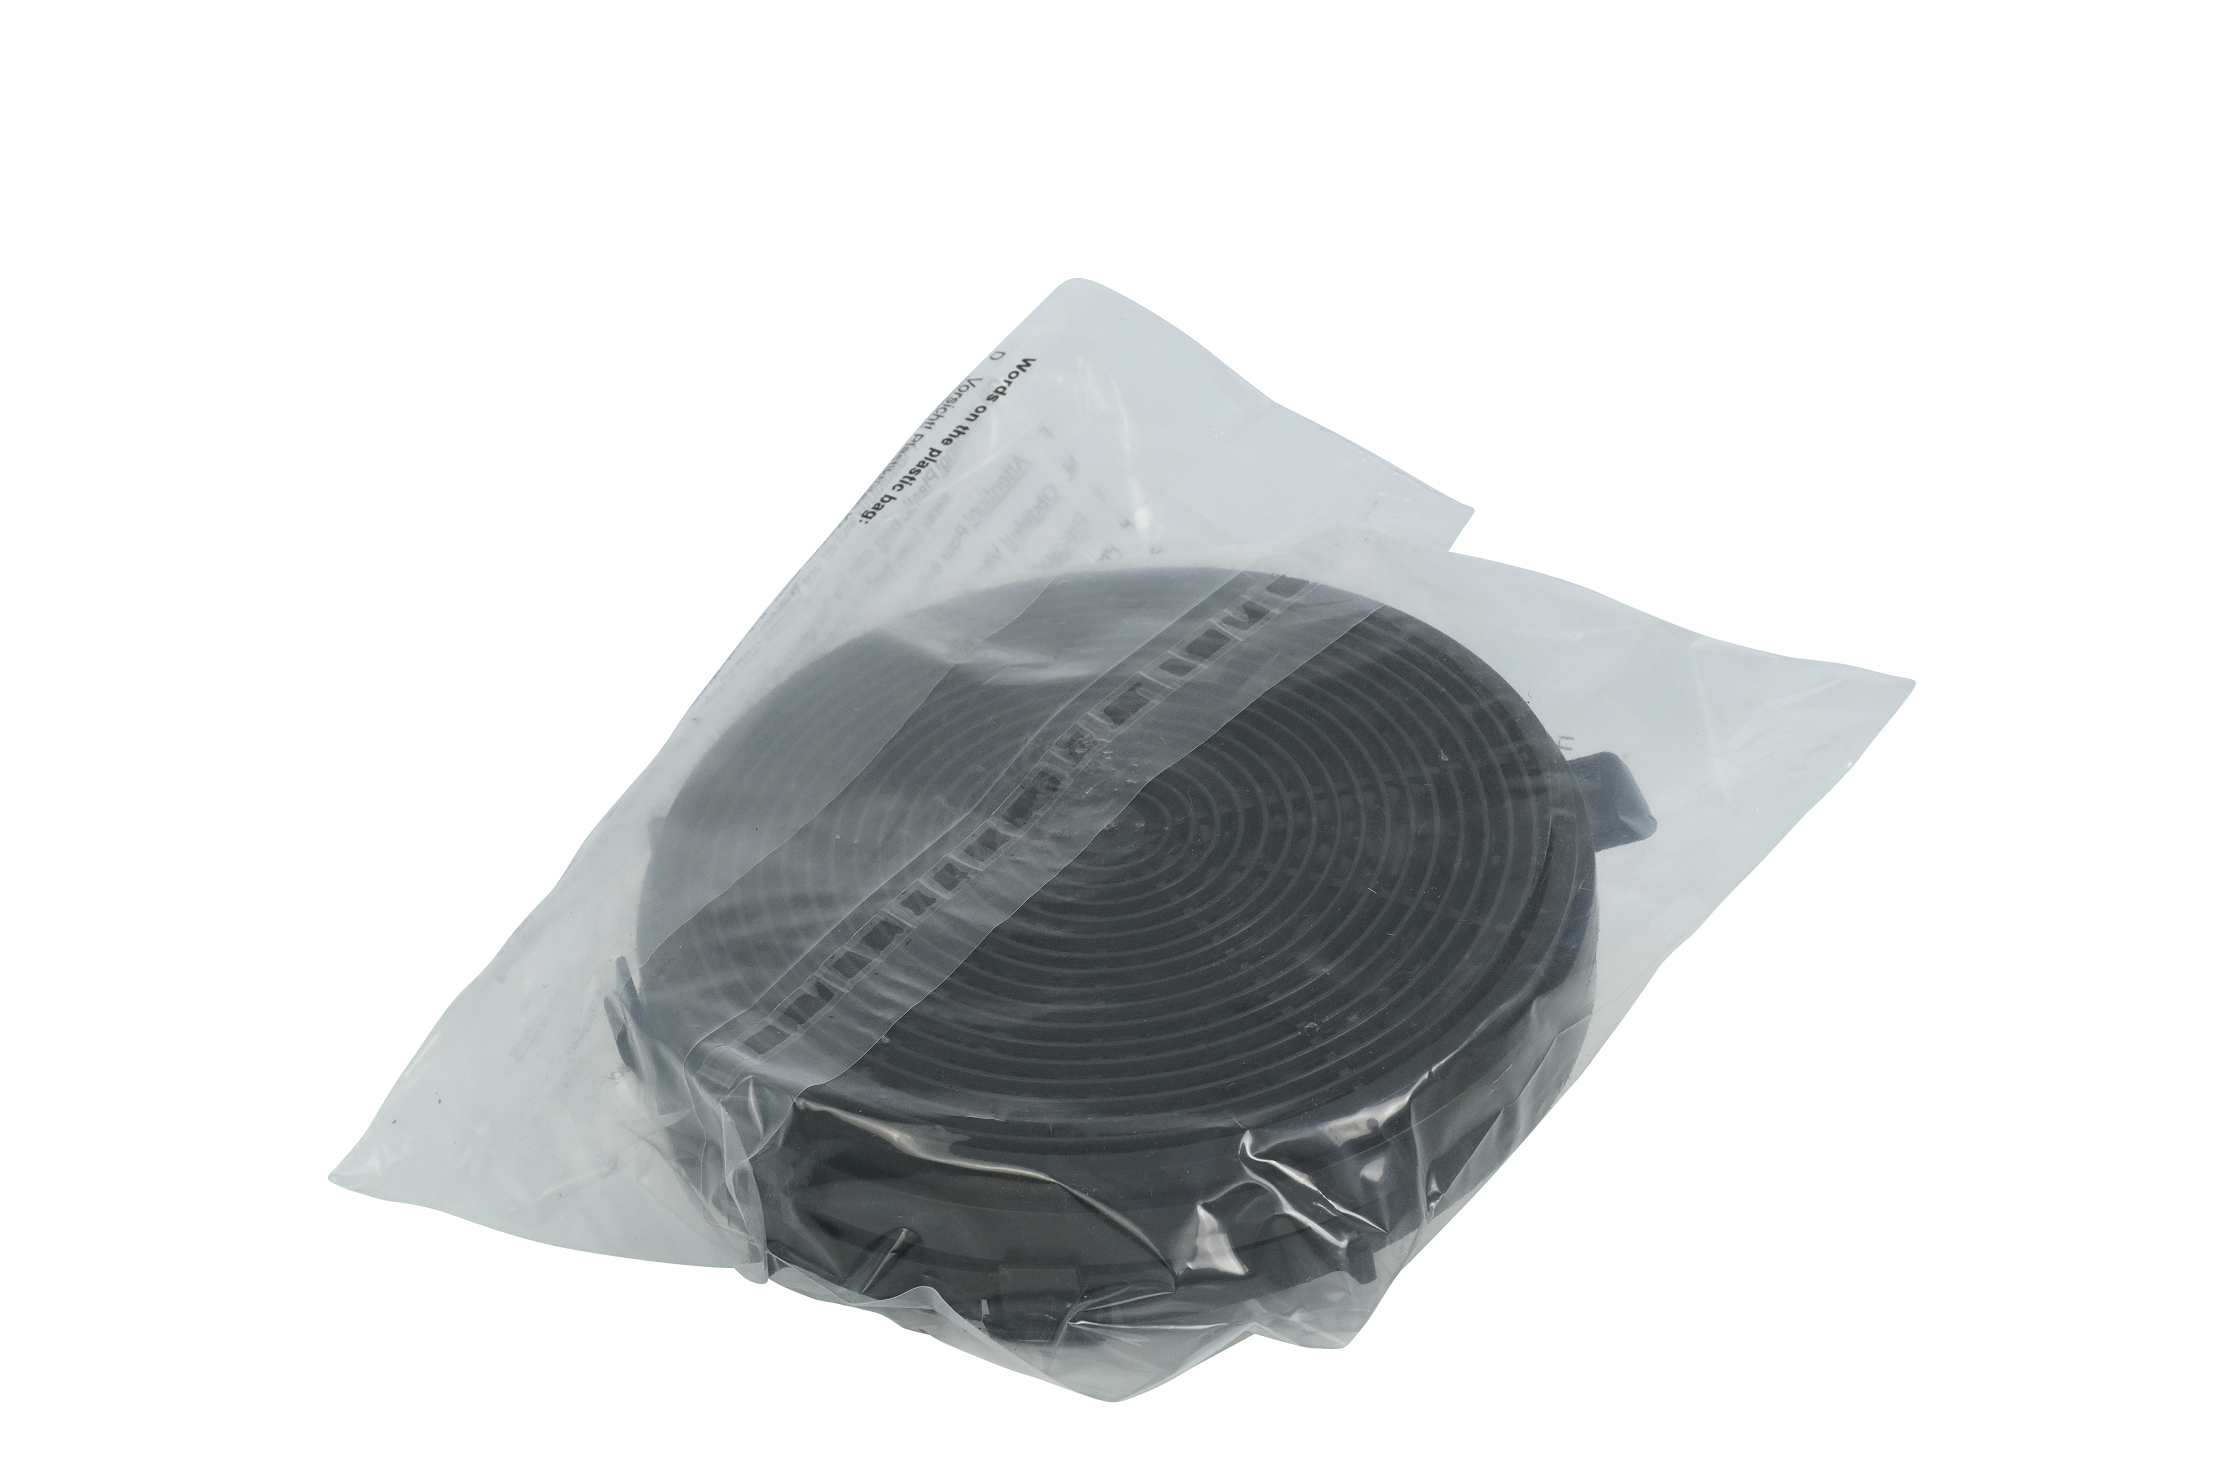 respekta active charcoal filter Active charcoal filter for recirculation cooker bonnet MIZ 5000